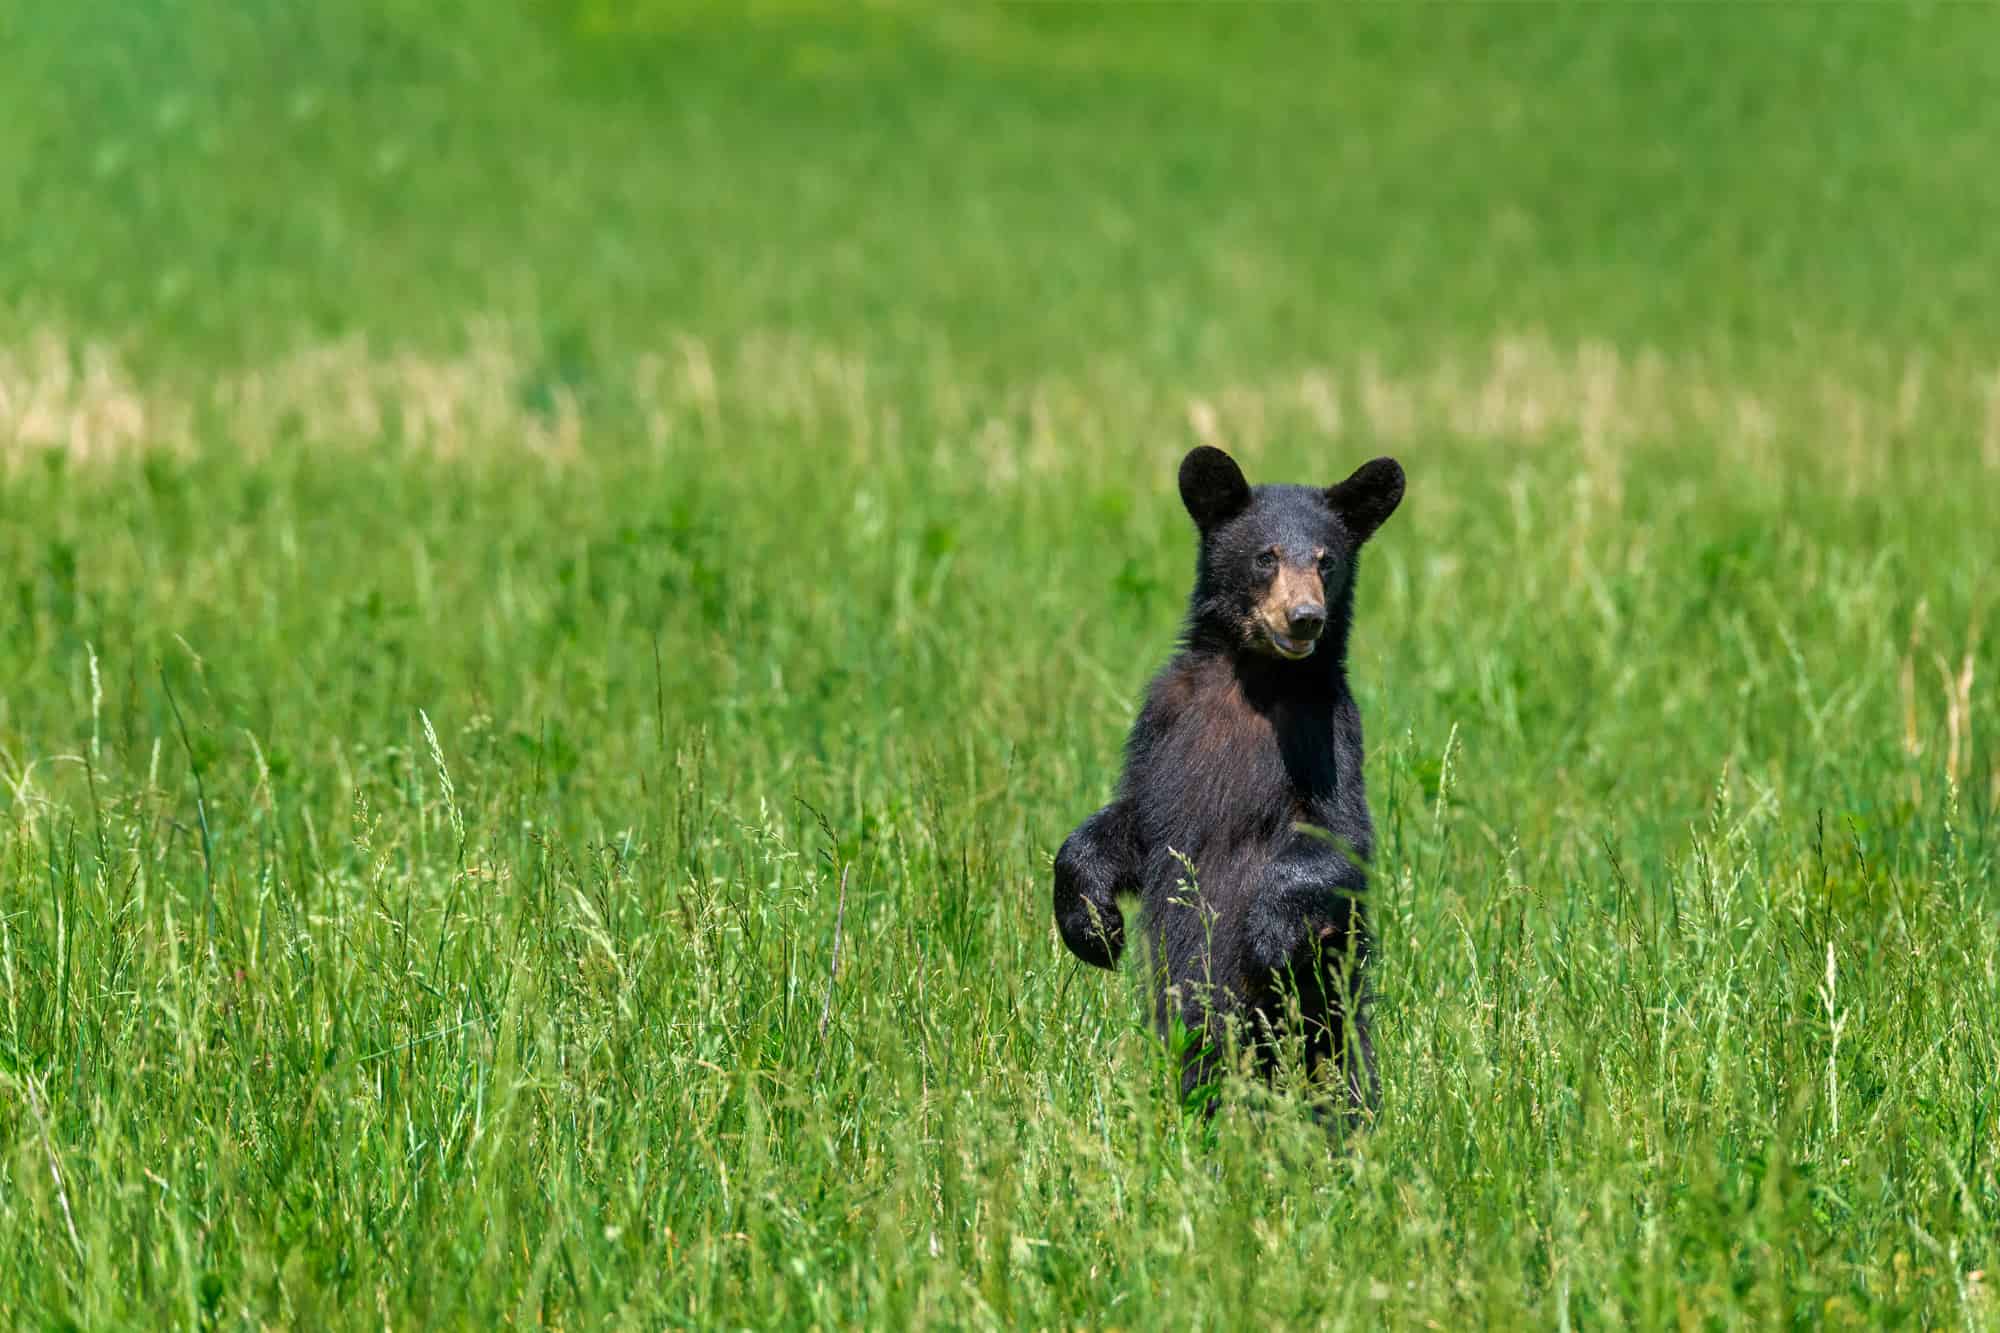 a black bear cub standing in the tall green grass